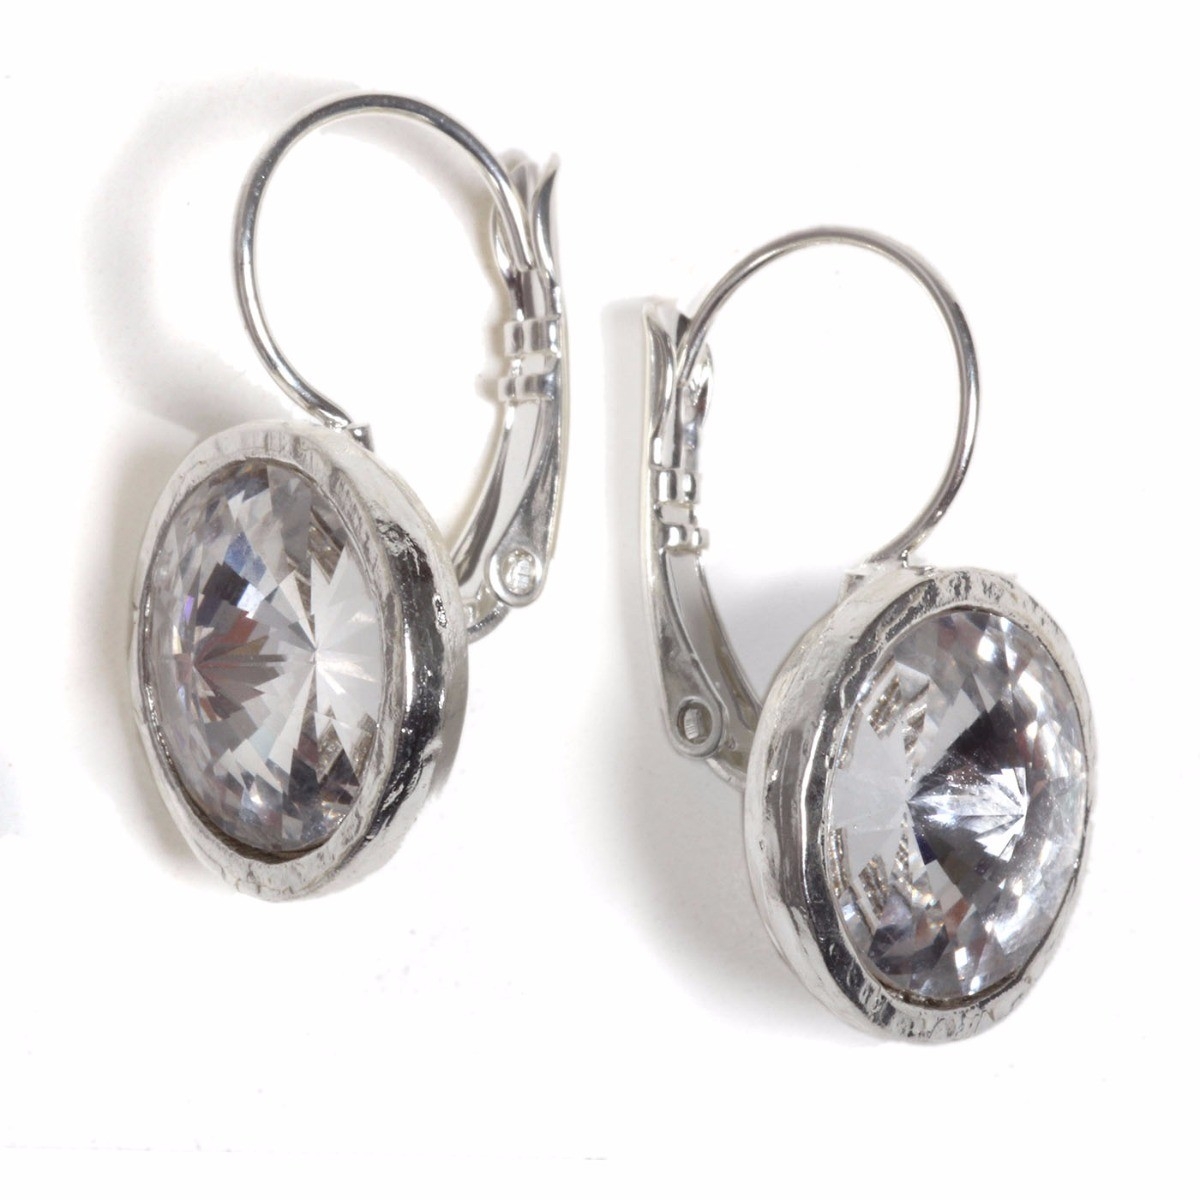 SEA Smadar Eliasaf Silver-Plated Drop Earrings with Clear Swarovski Crystal - 1